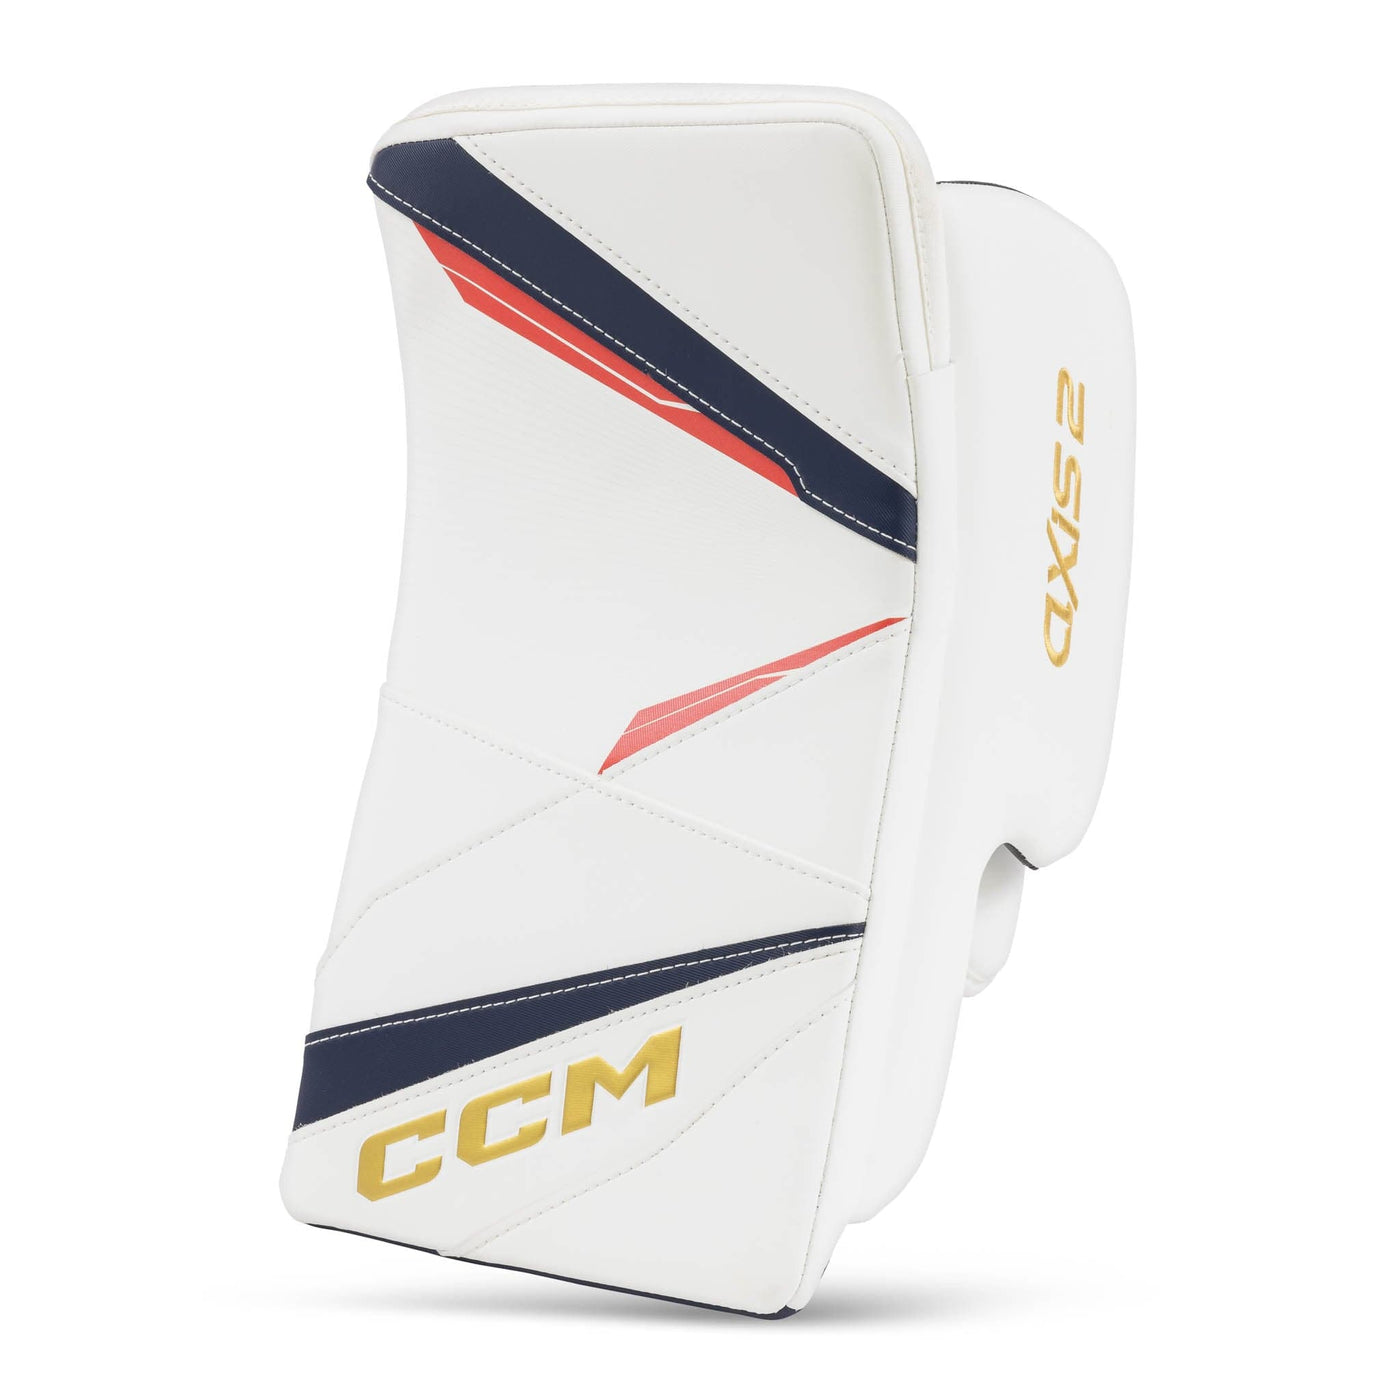 CCM Axis 2 Senior Goalie Blocker - The Hockey Shop Source For Sports